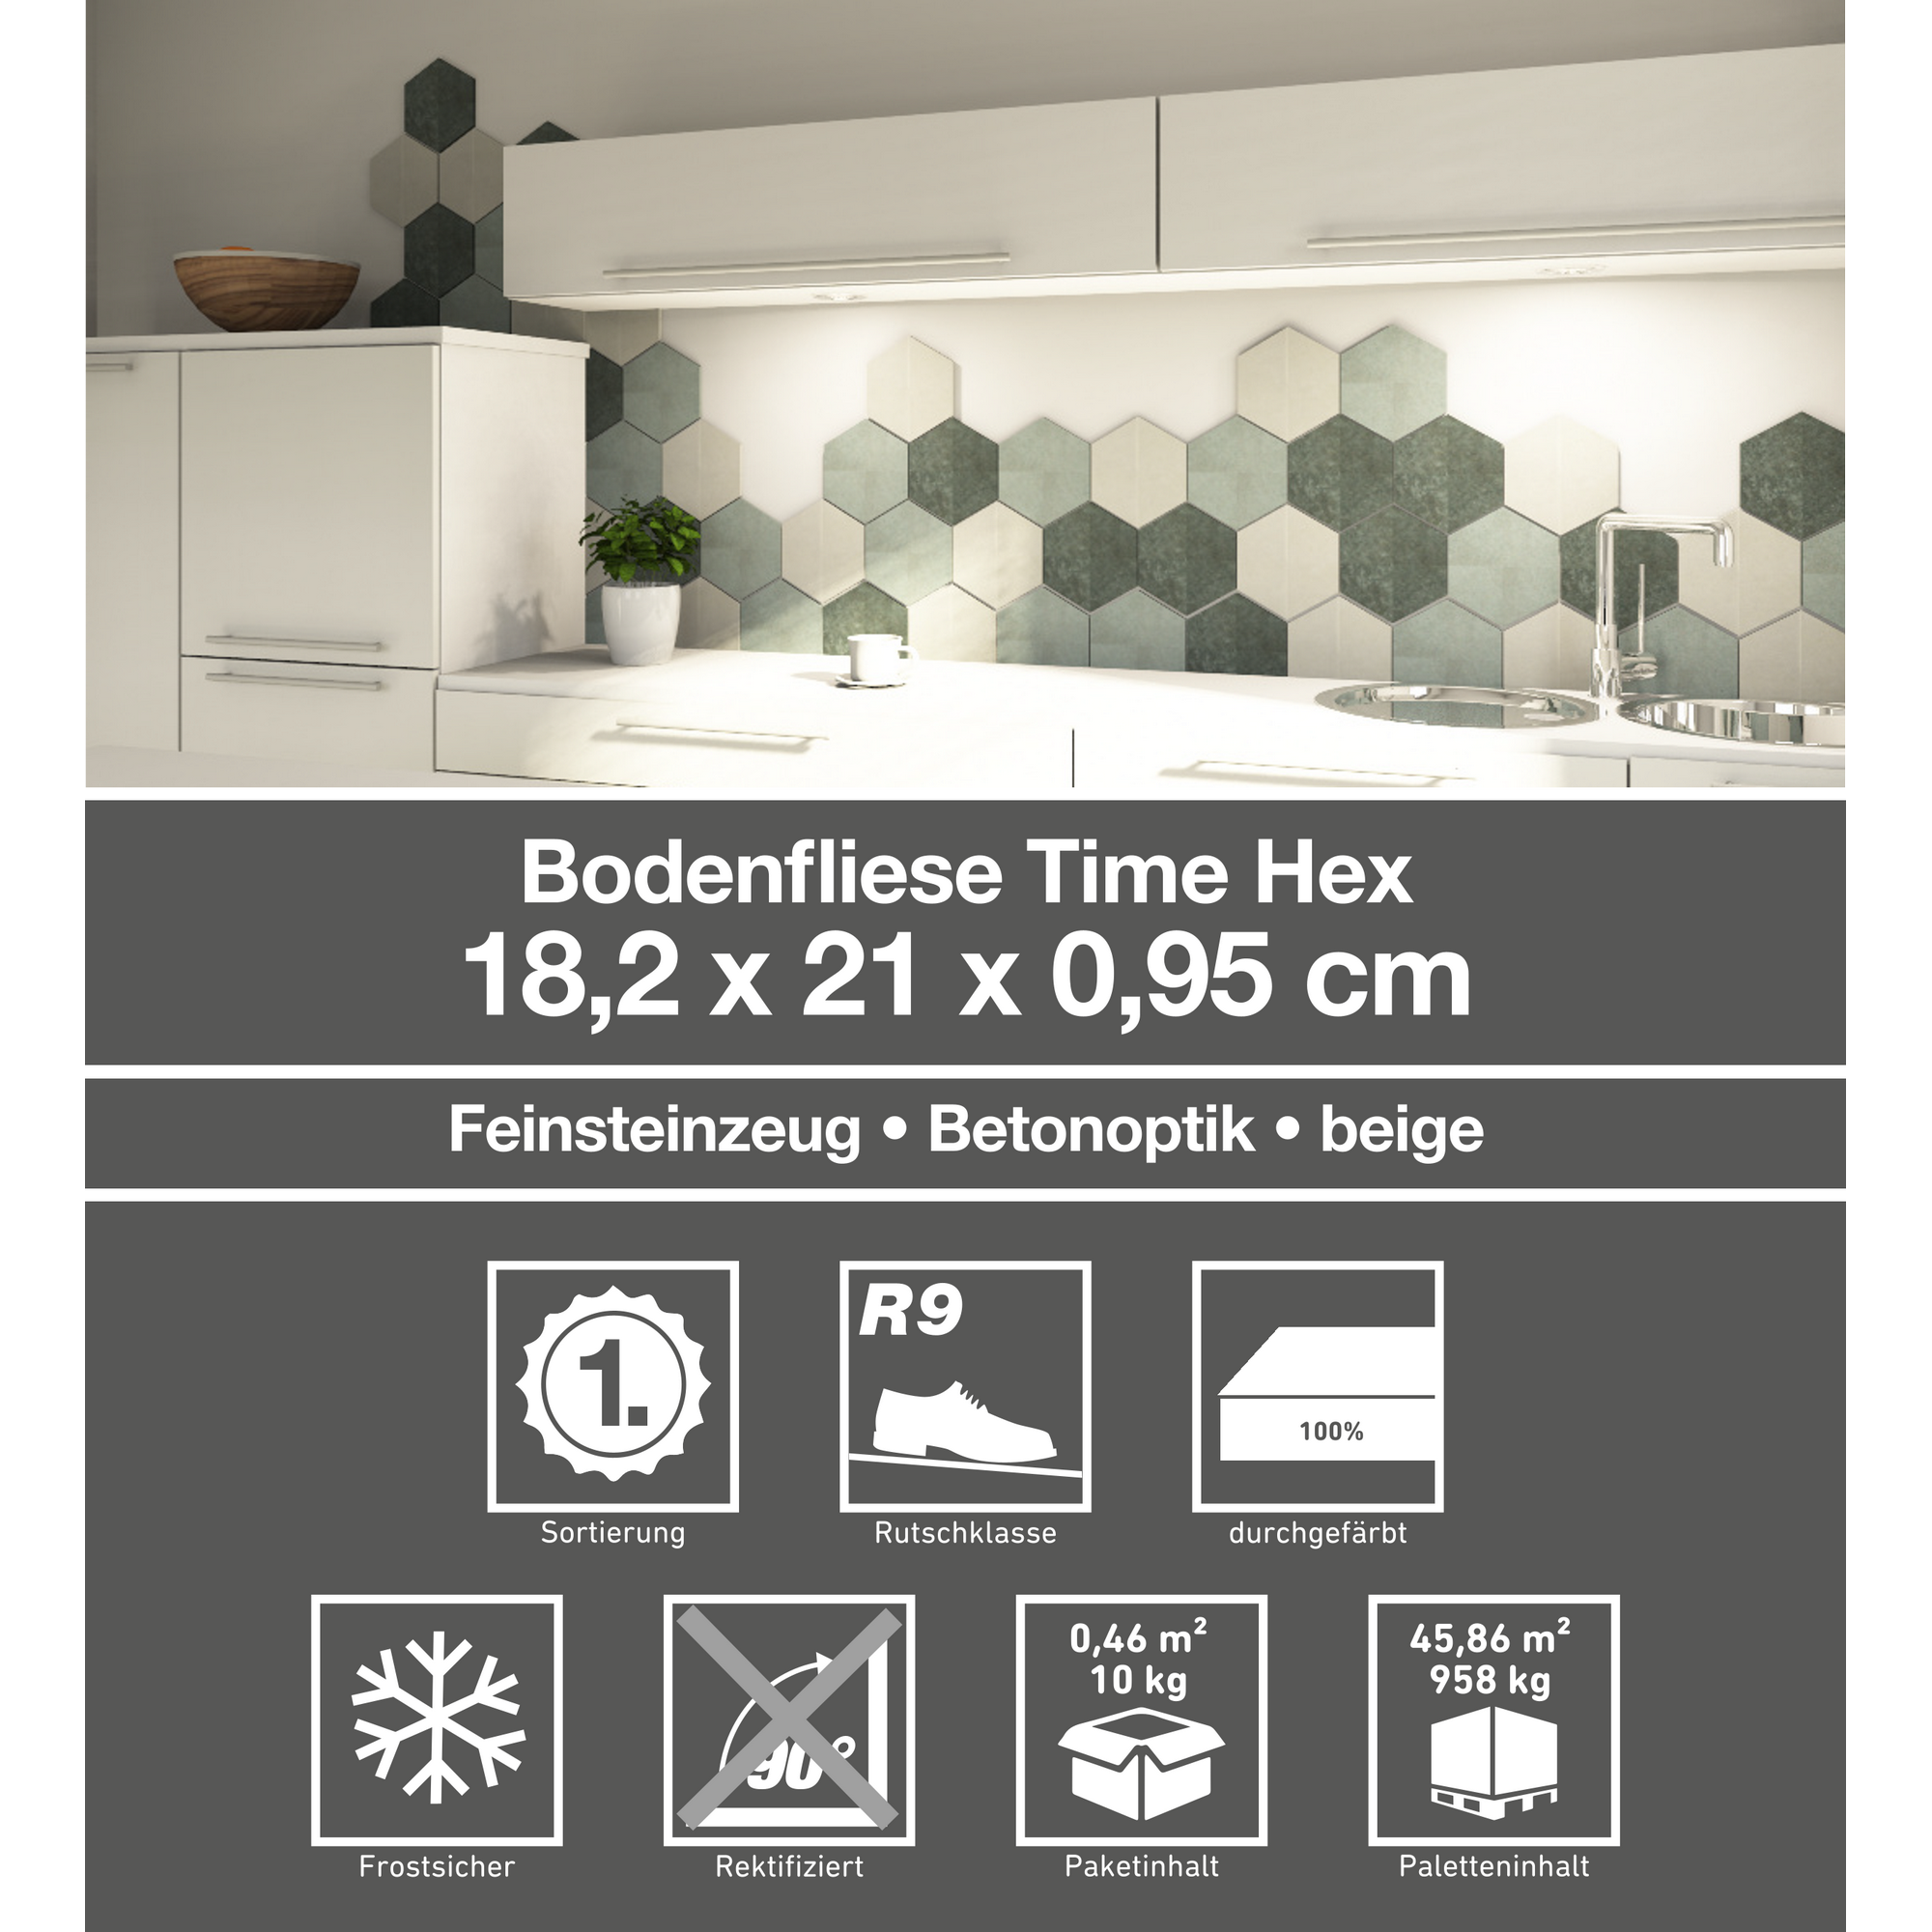 Bodenfliese 'Time Hex' Feinsteinzeug beige 18,2 x 21 cm + product picture